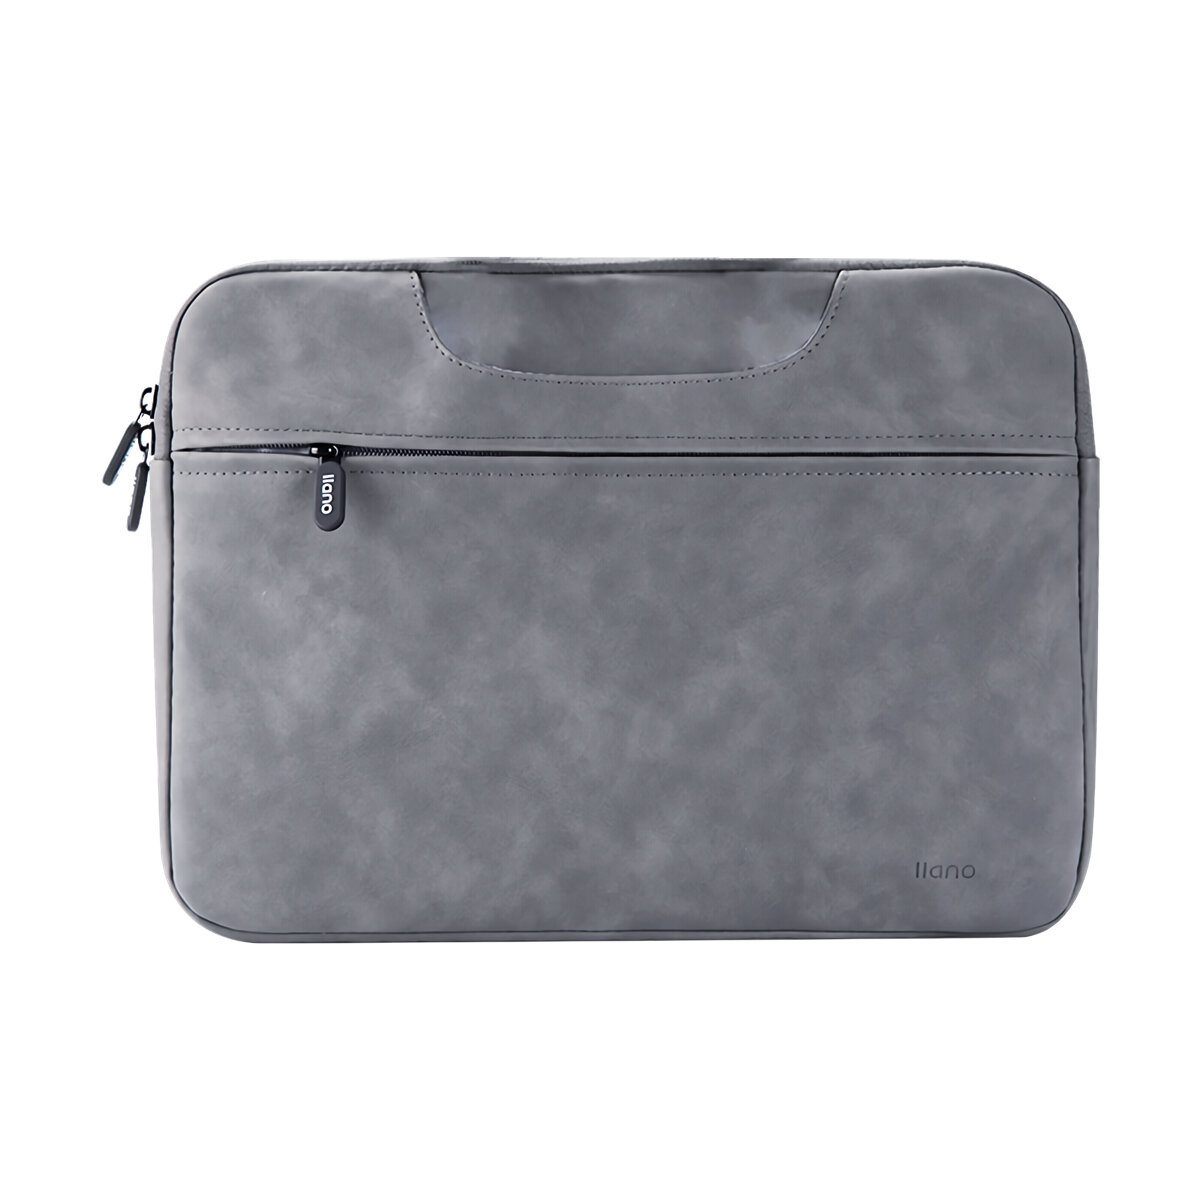 llano Laptop Bag Large Capacity Multi-pocket Mouse Pad + Laptop Case Dual Use Waterproof Handheld La